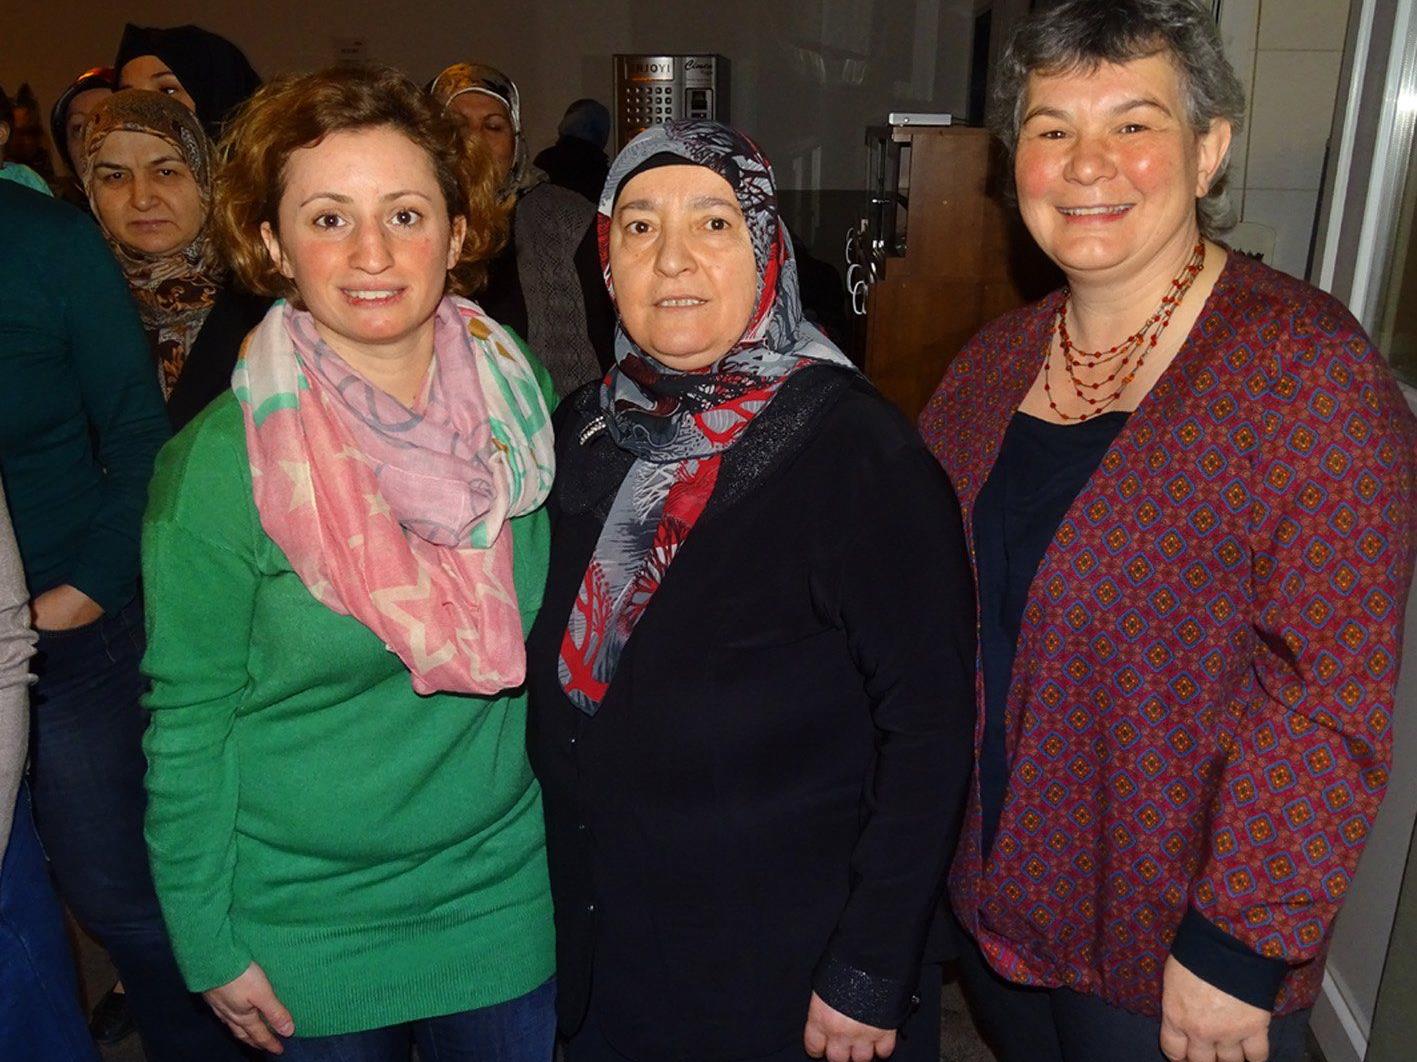 Senay Öztürk, ATIB-Obfrau Ünal Münever und Sabine Reis (v.l) organisierten das Frauenfrühstück.